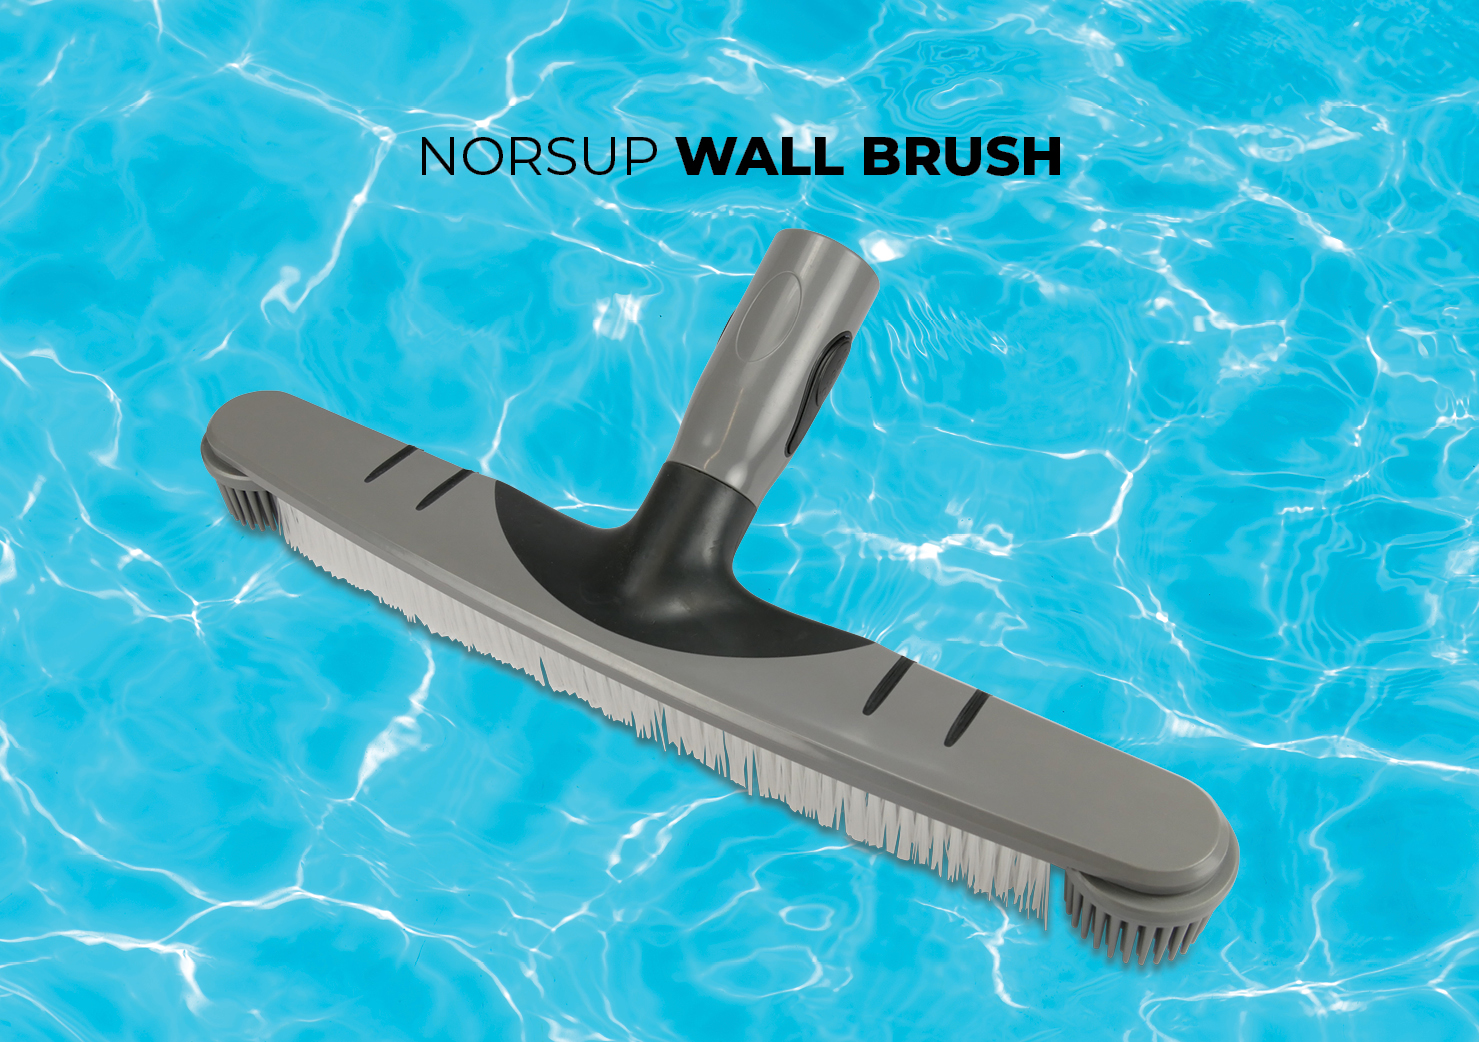 Norsup wall brush